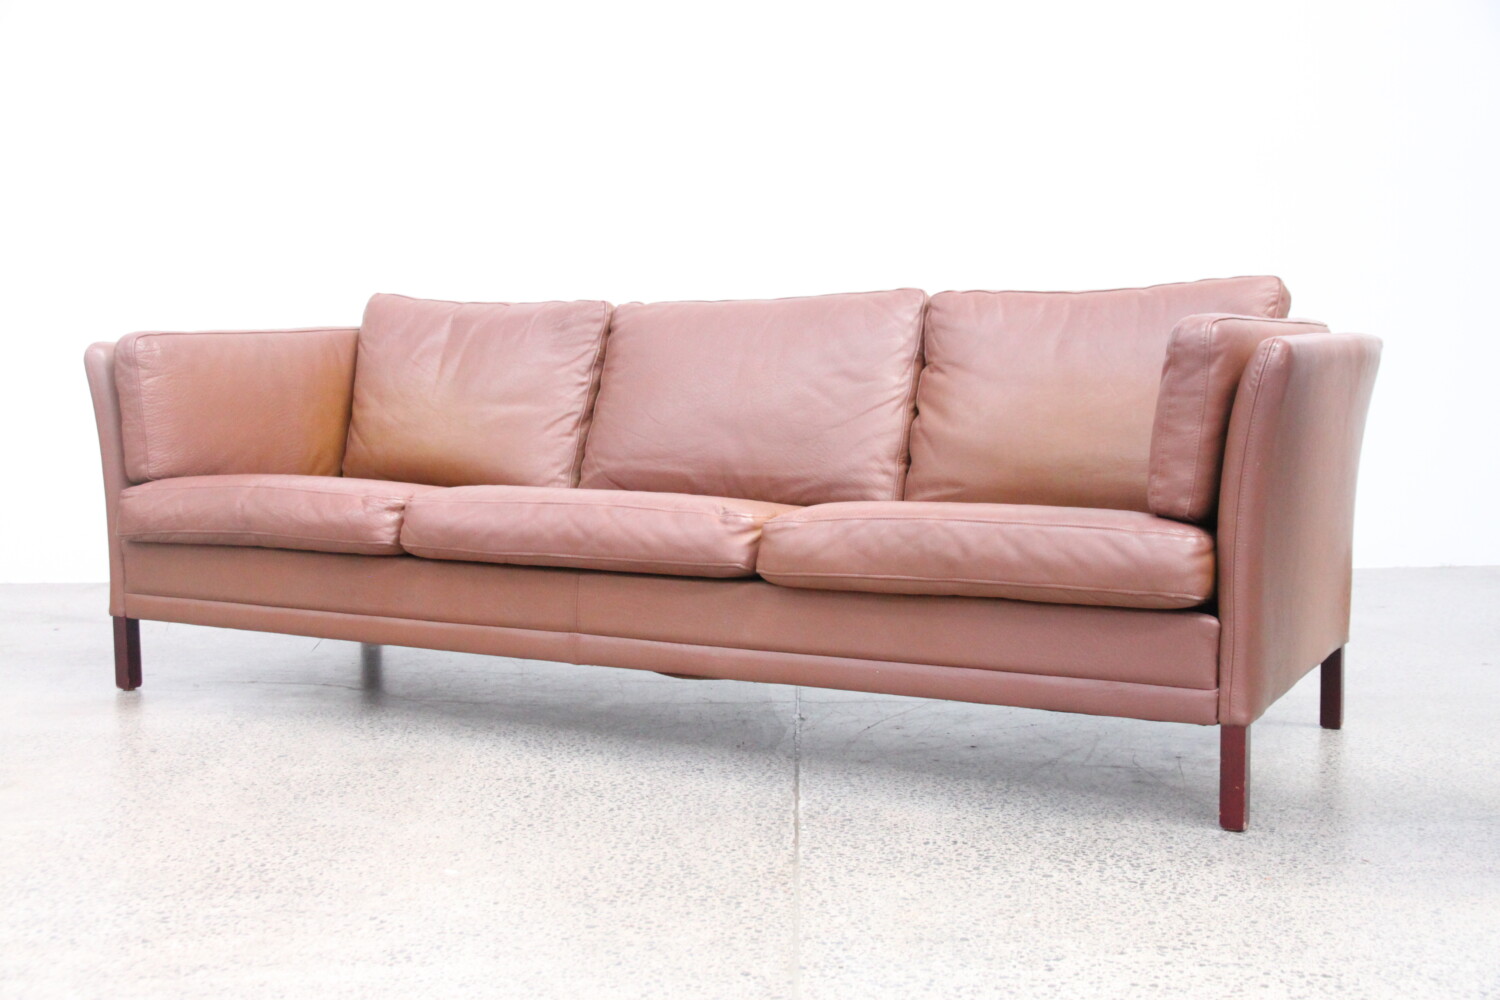 Brown Danish Leather Sofa